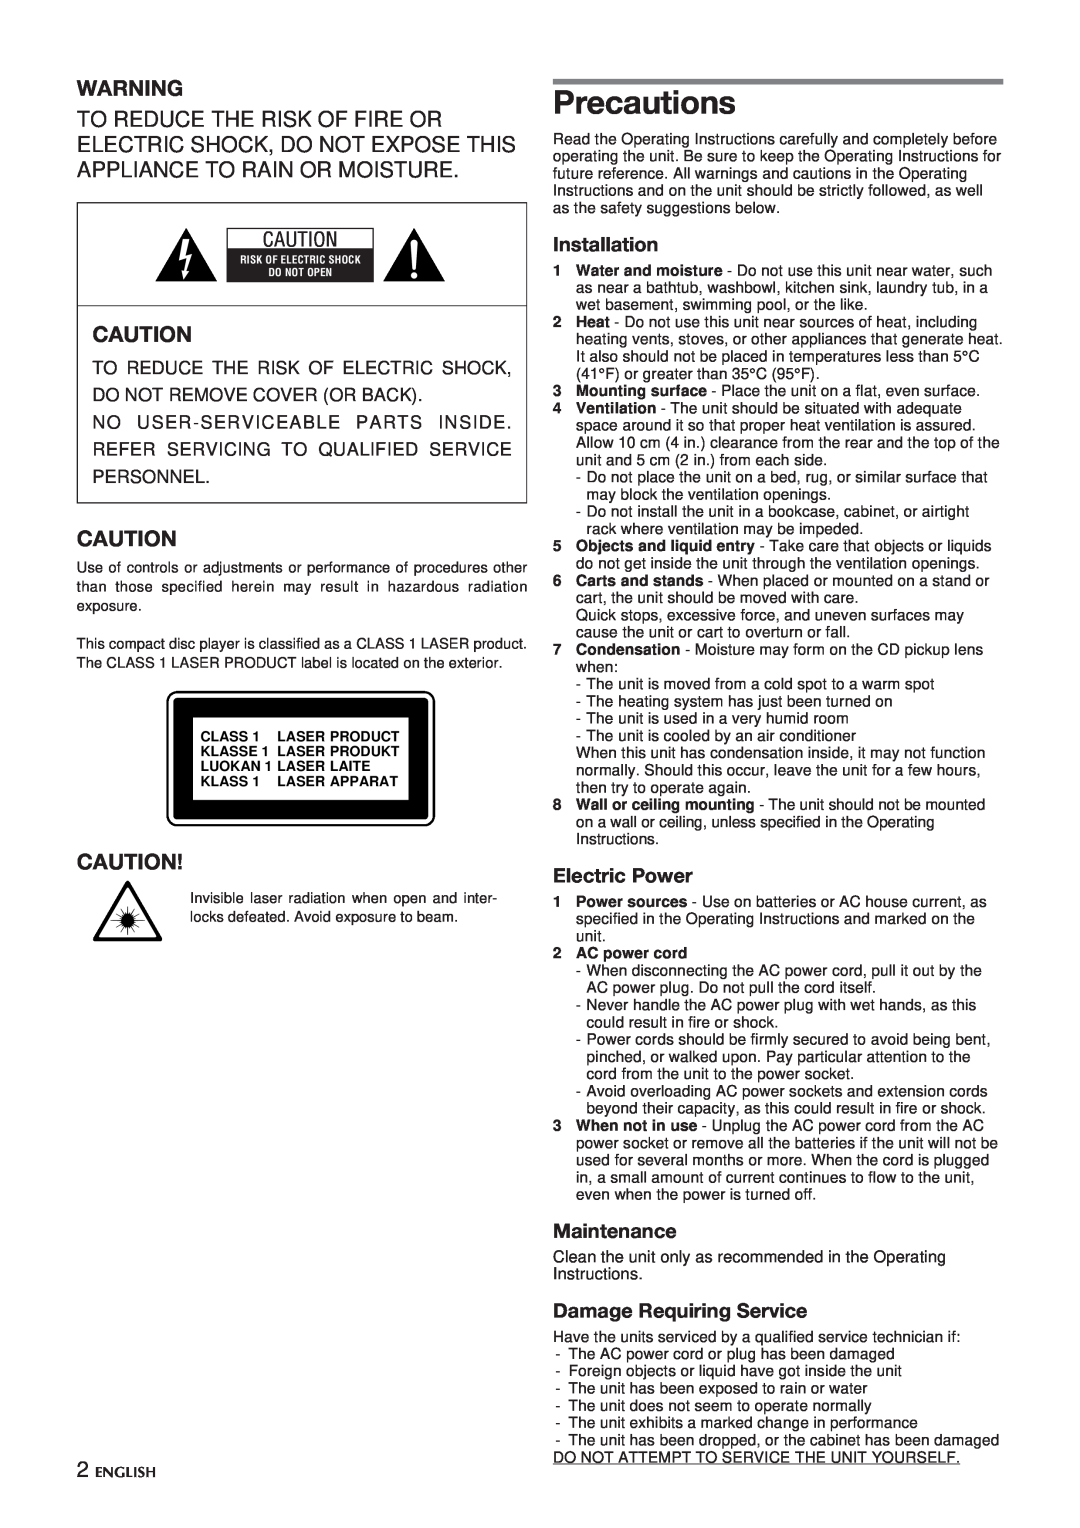 Aiwa CSD-TD20 manual Precautions, Installation, Electric Power, Maintenance, Damage Requiring Service 